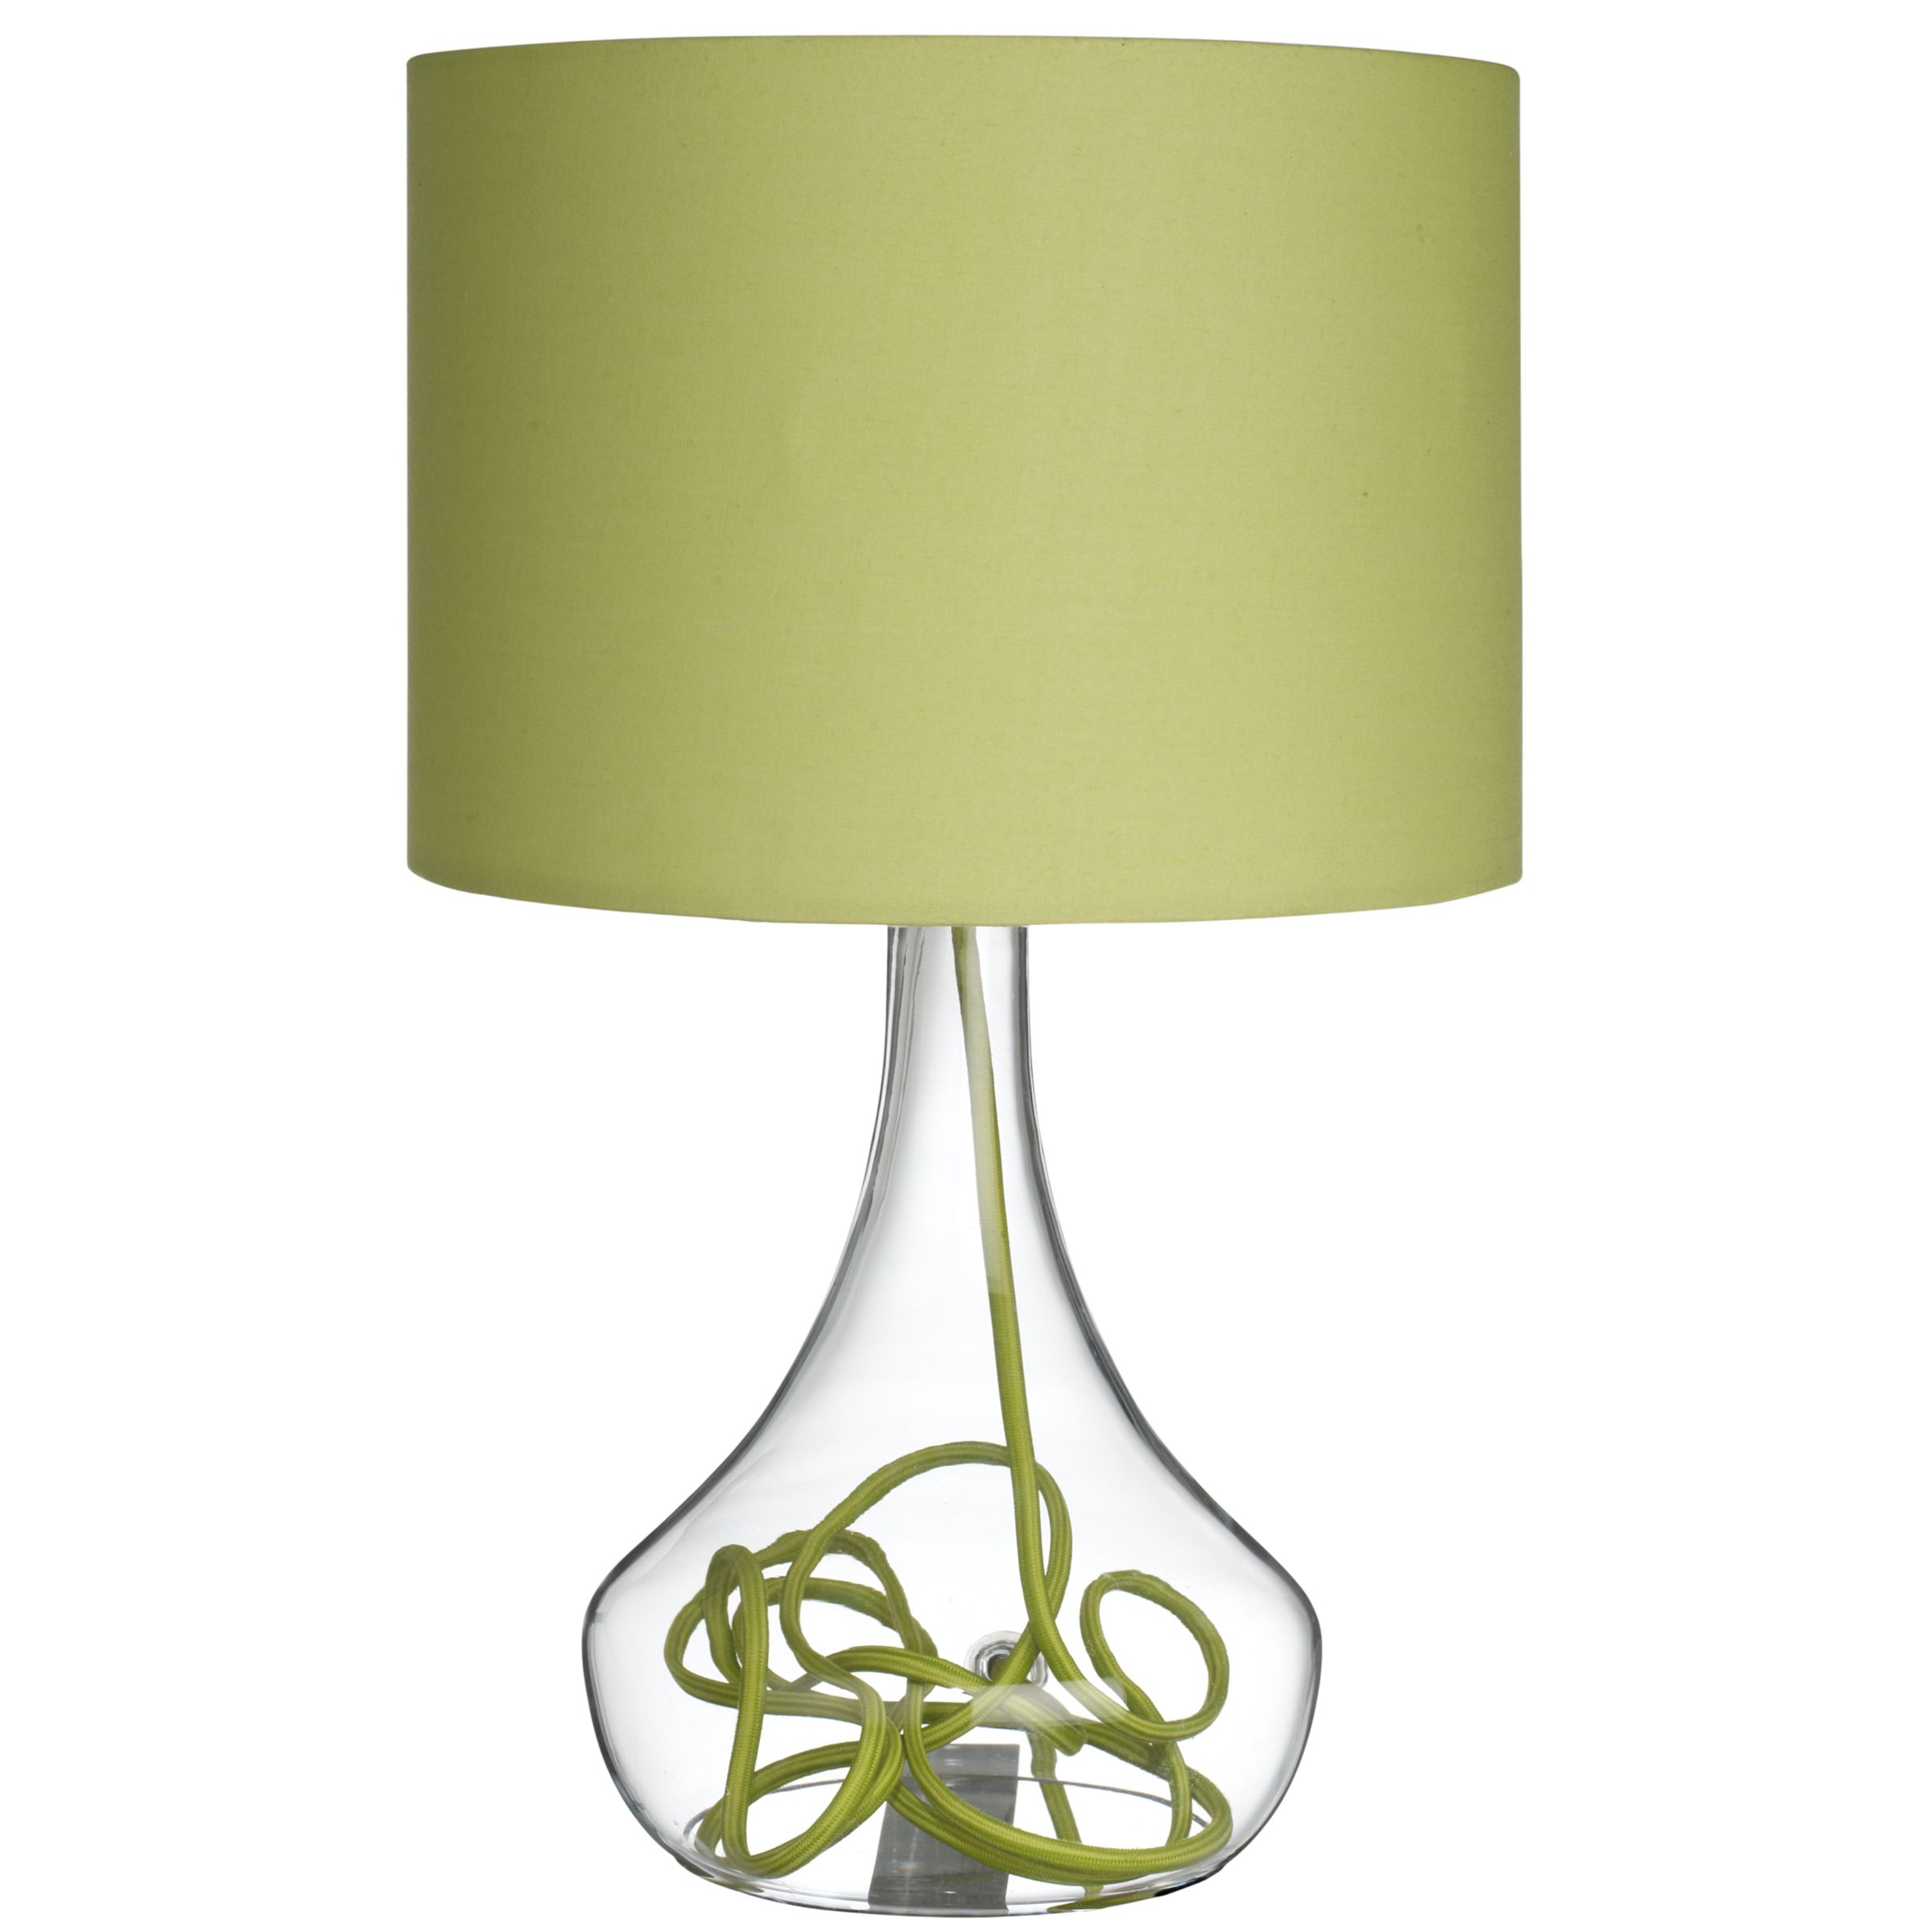 John Lewis Jolie Table Lamp, Green